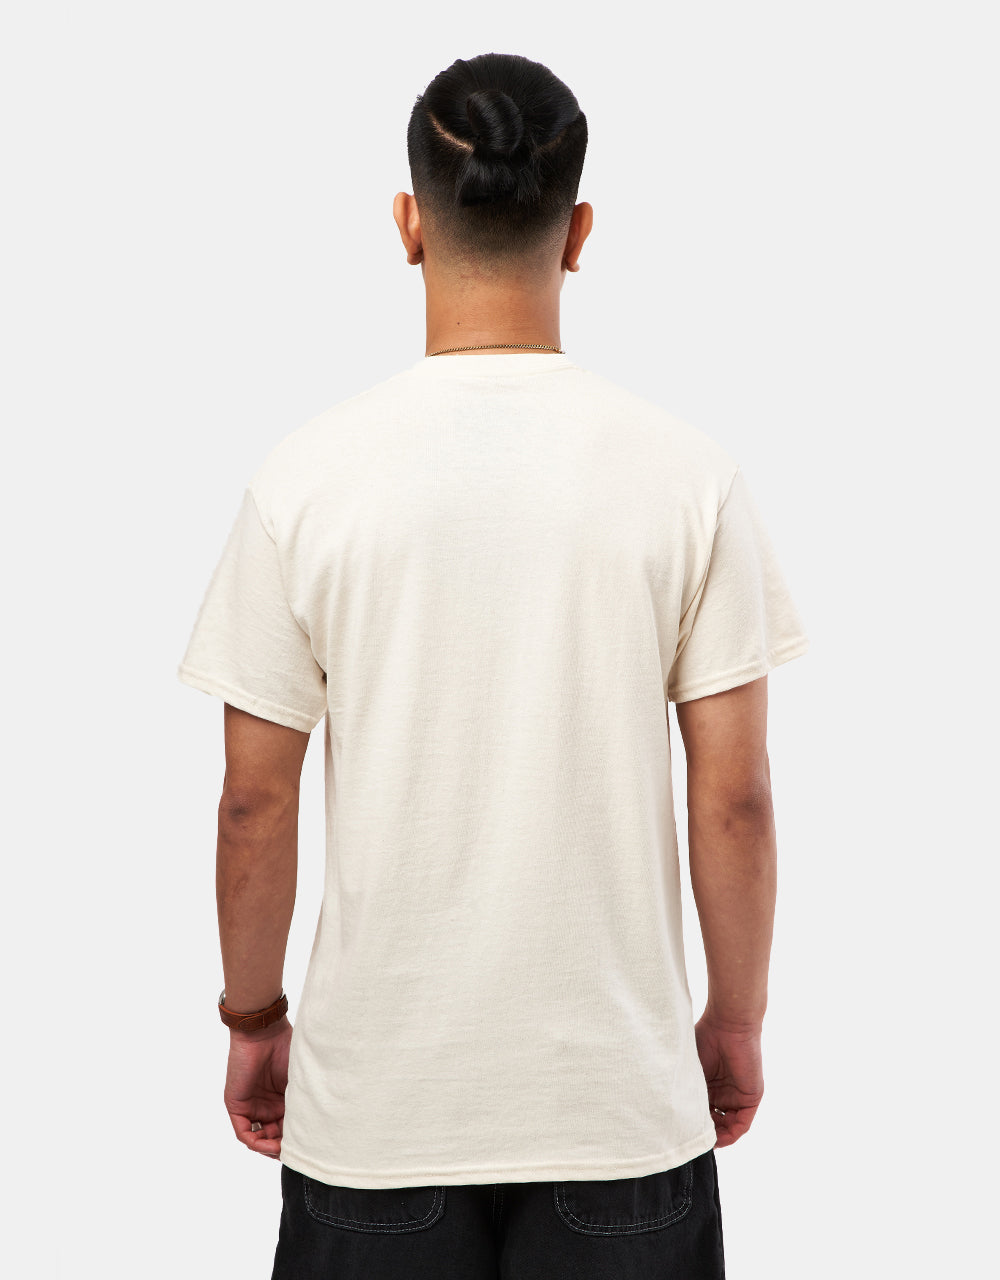 Krooked Sweatpants T-Shirt - Natural/Multi